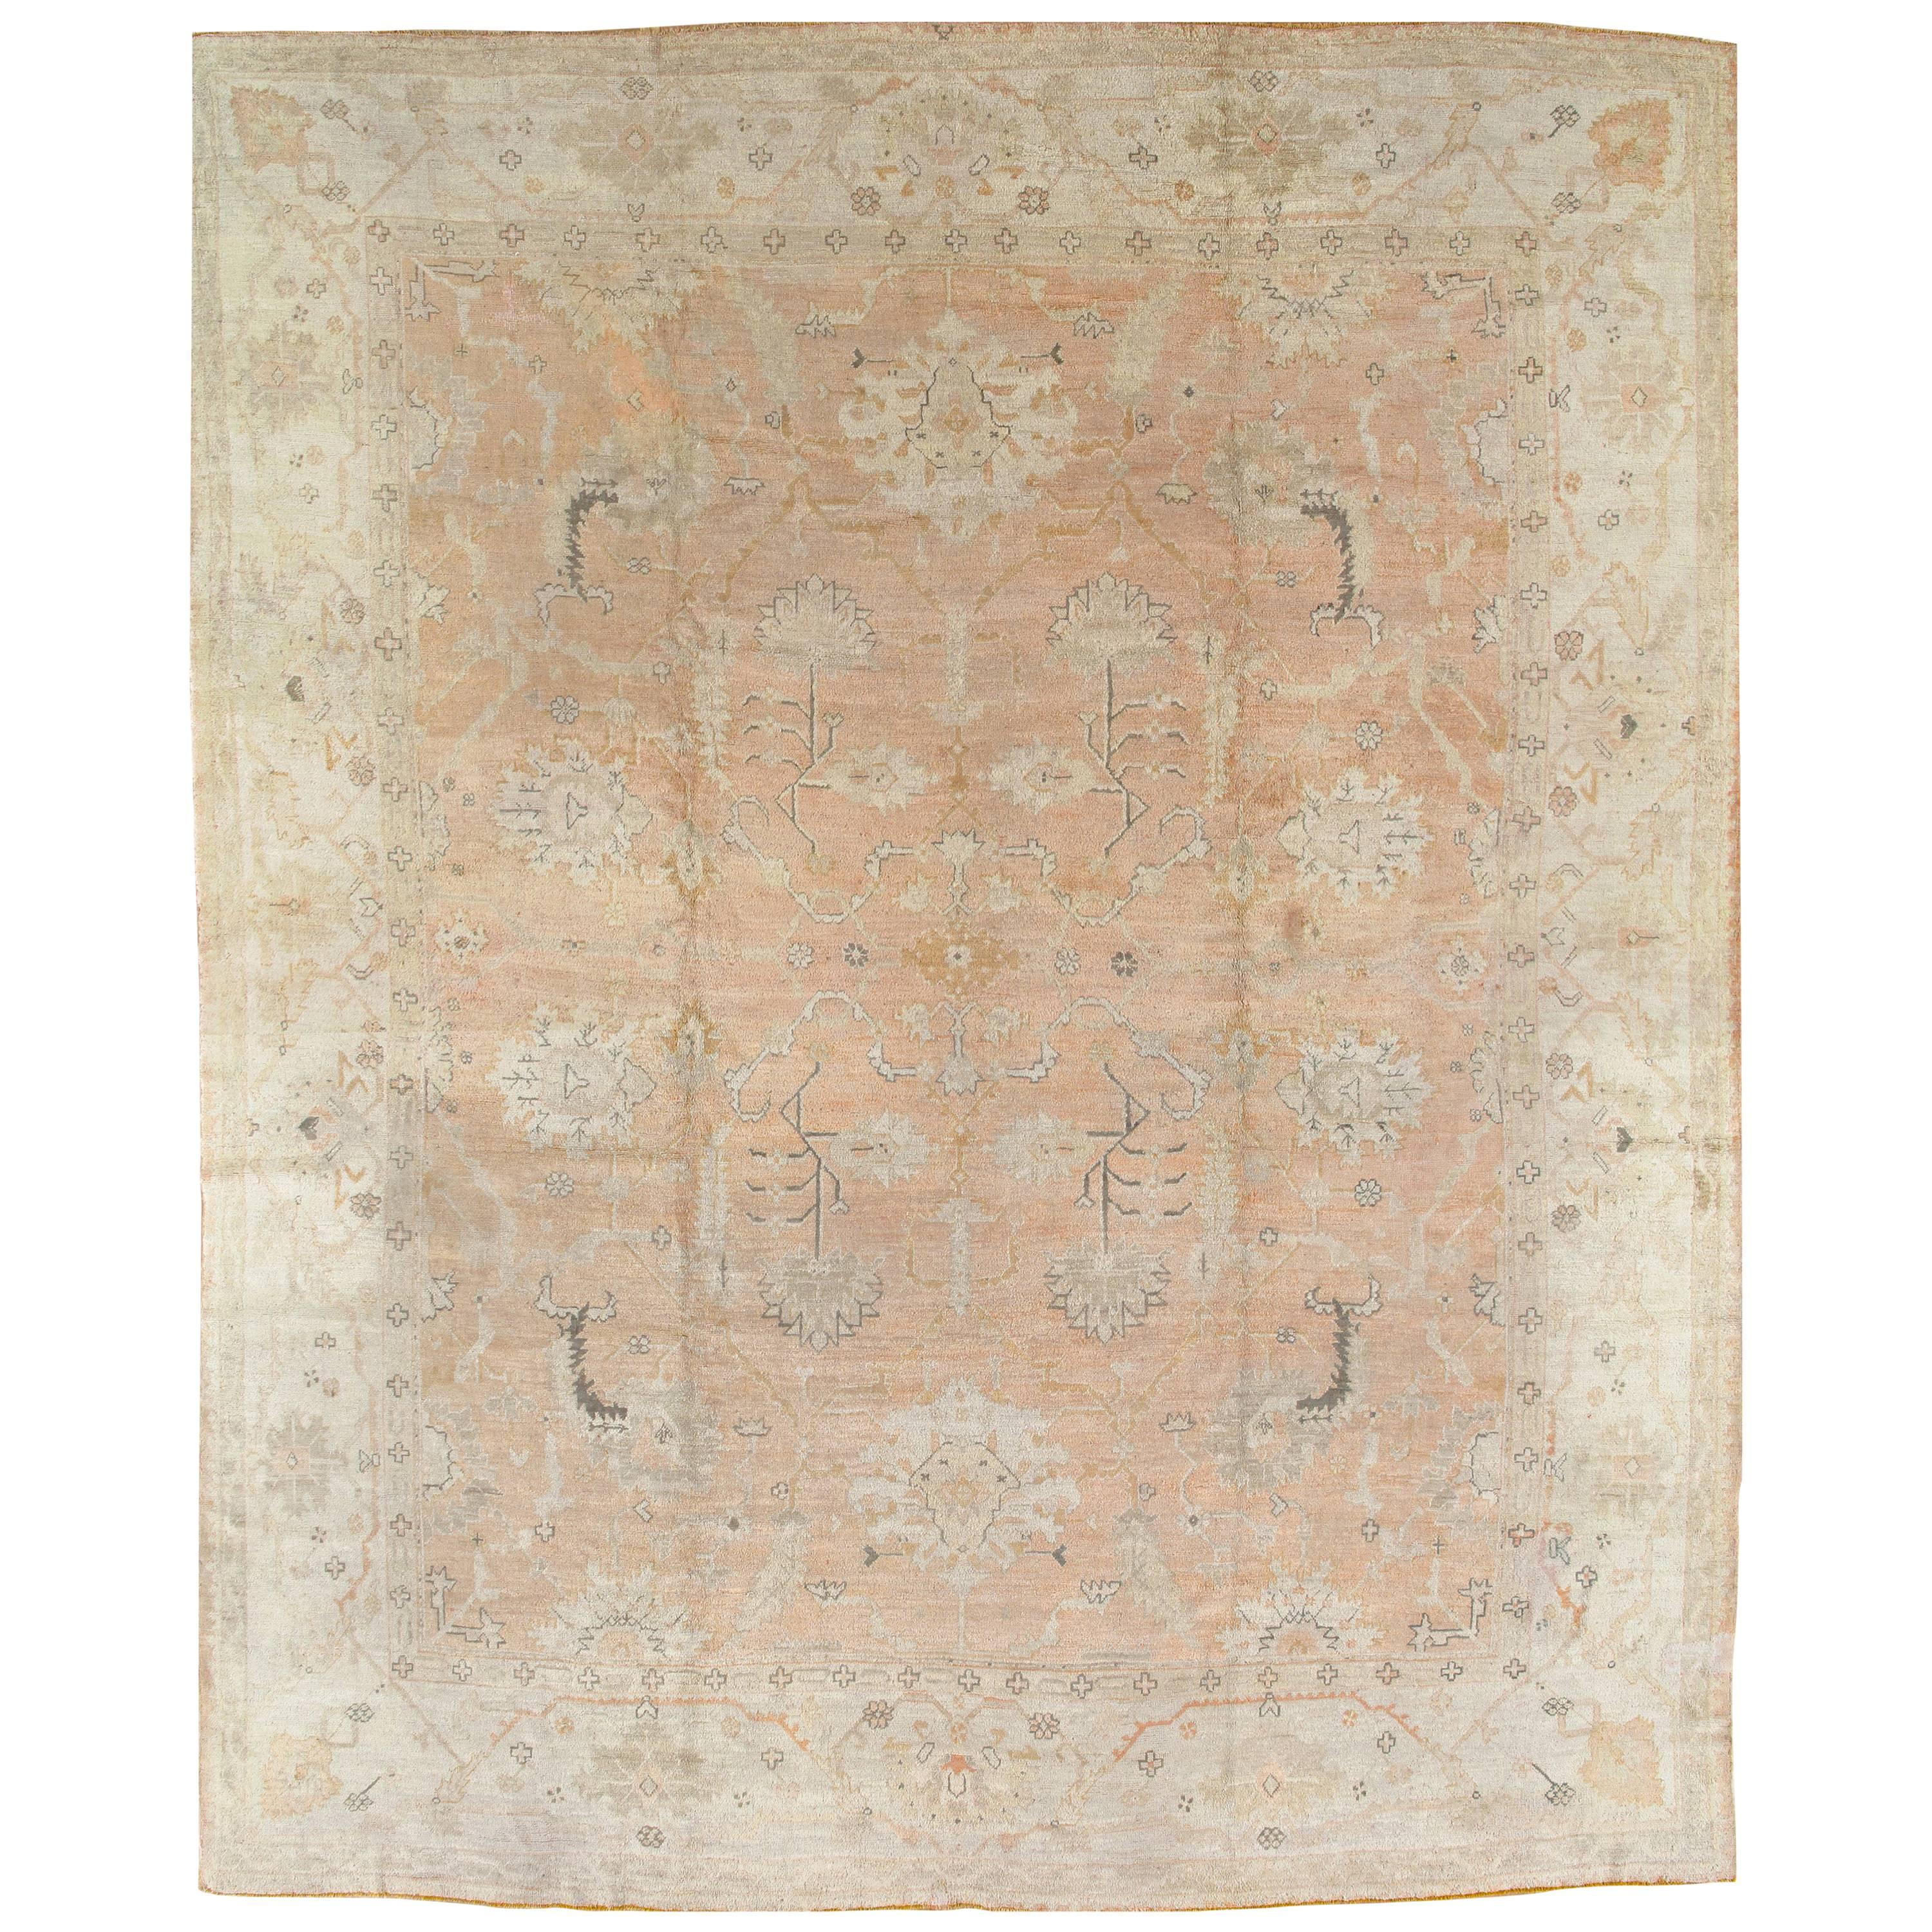 Antique Oushak Carpet, Turkish Rugs, Handmade Oriental Rugs, Pink Ivory Fine Rug